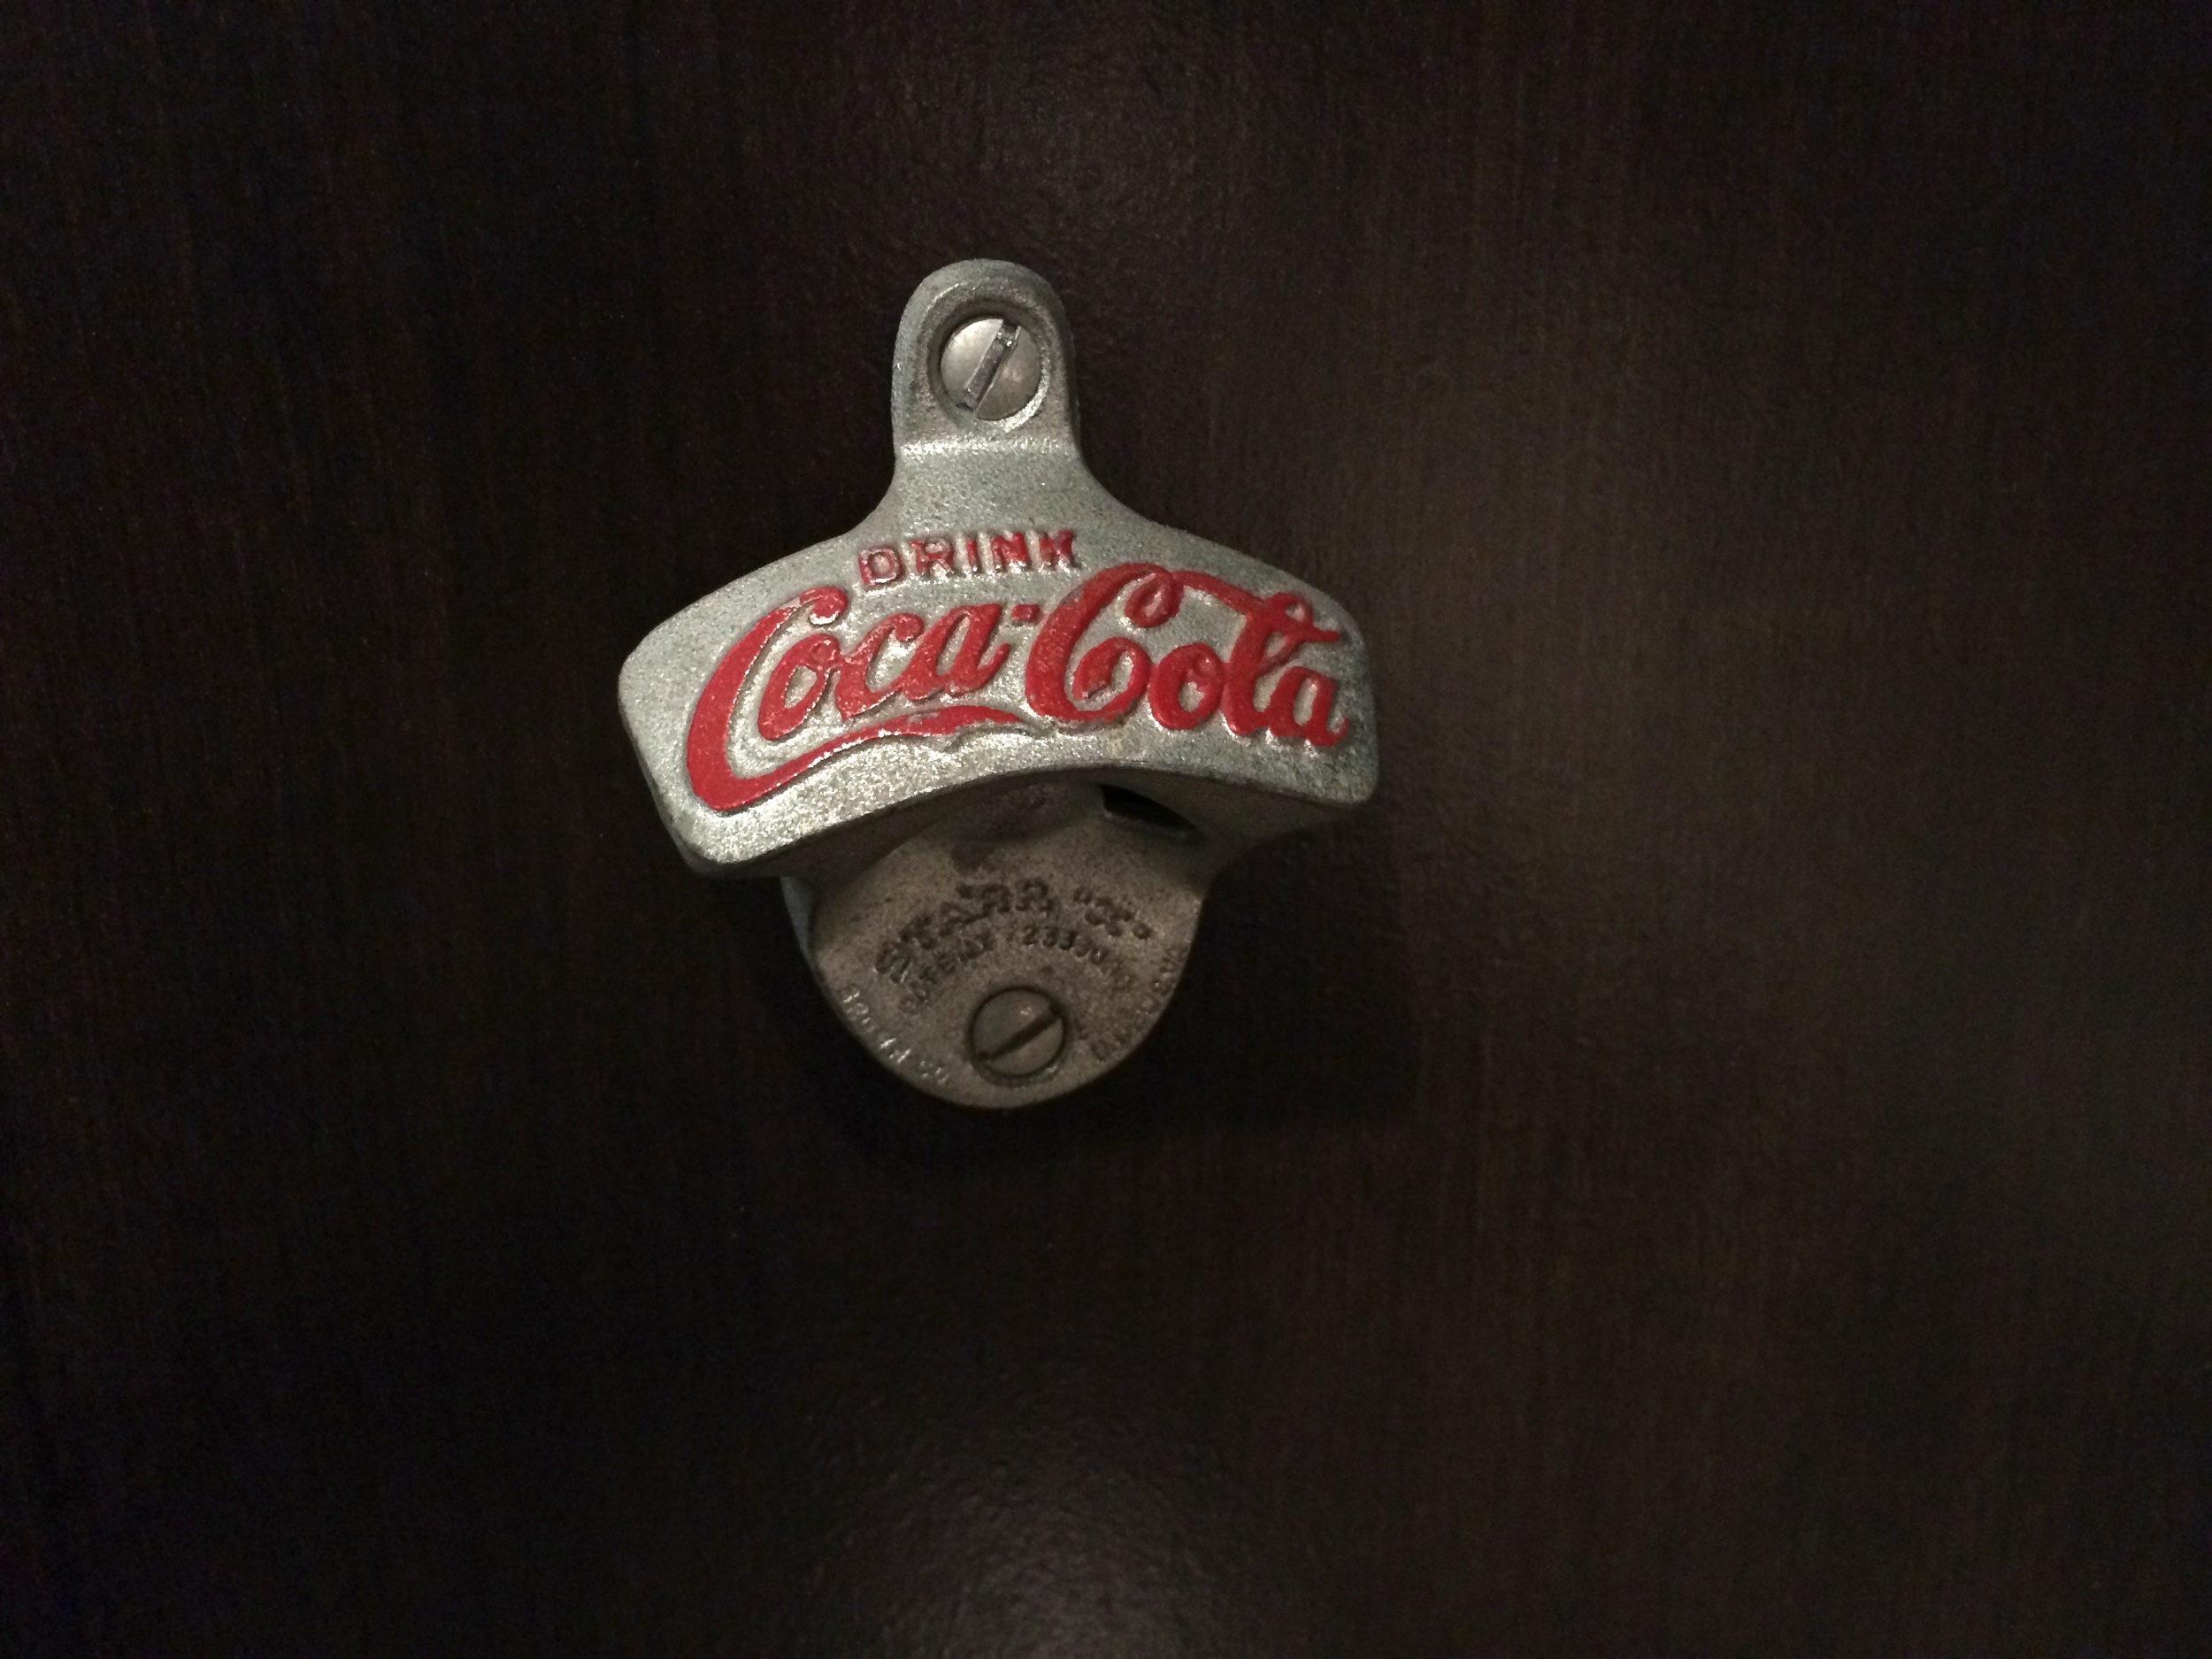 Vintage Original Coca-Cola Starr /"X/" Stationary Bottle Opener In Original Box